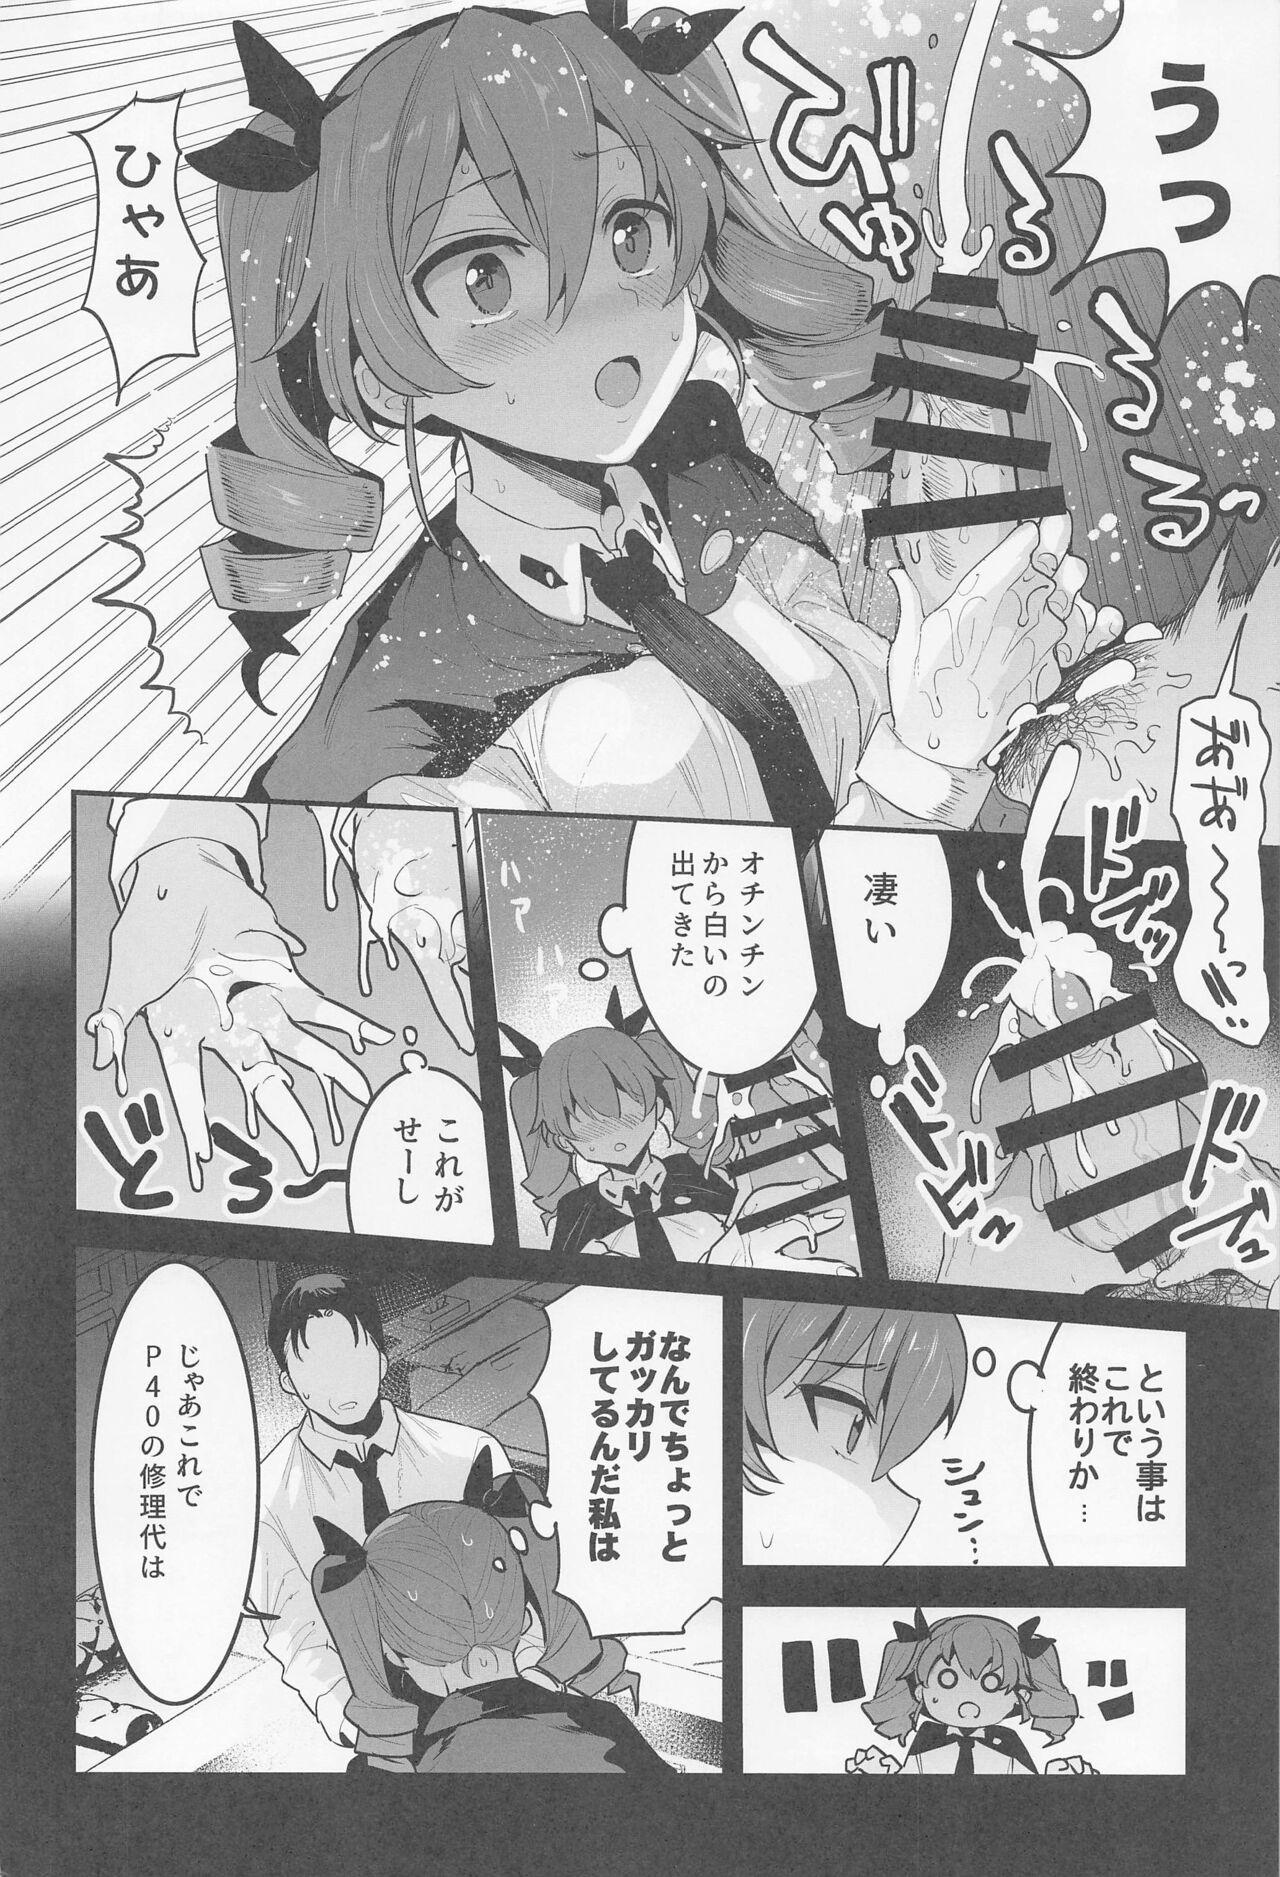 Bisex anchobi dogezadeonegaishitaraippatsuyarasetekuremashita - Girls und panzer Strapon - Page 9